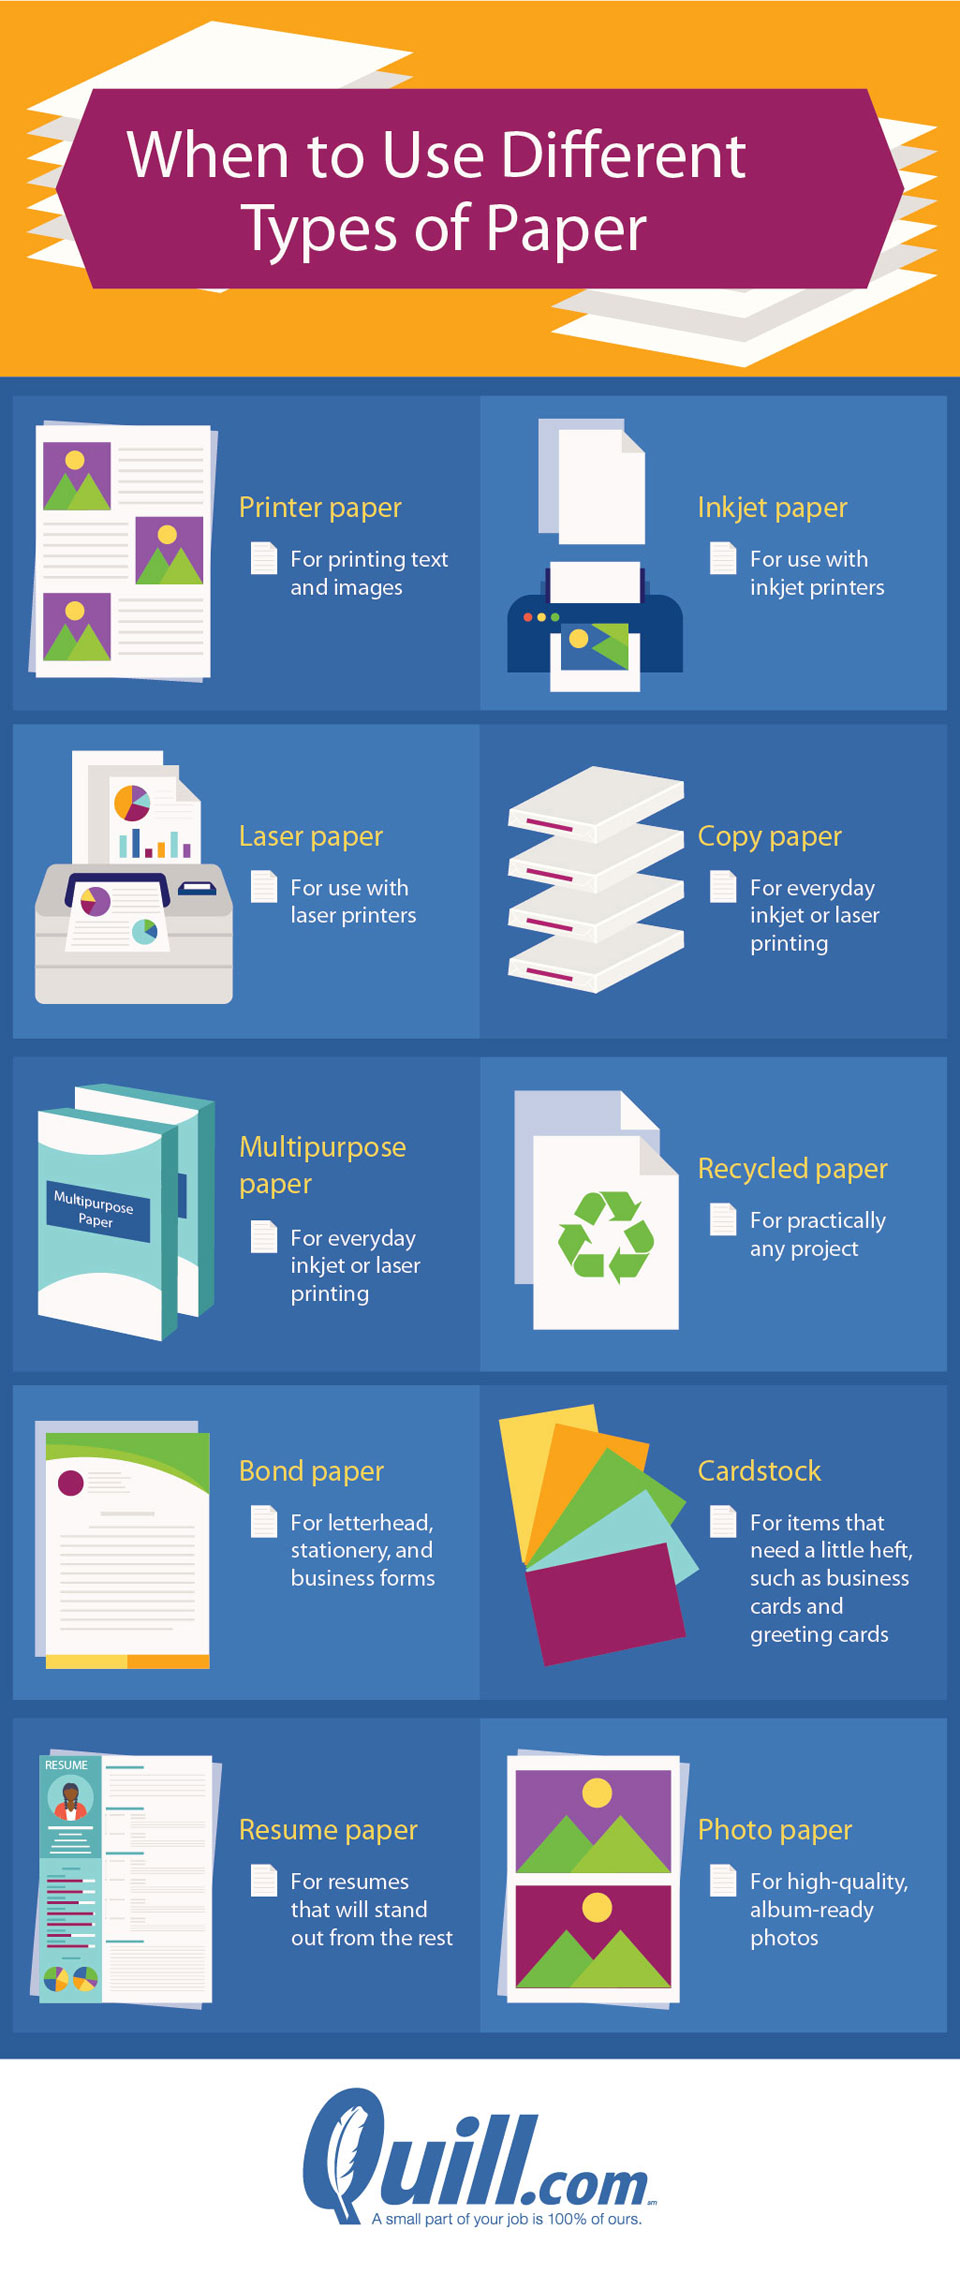 When to use multipurpose paper vs. copy paper | Quill.com